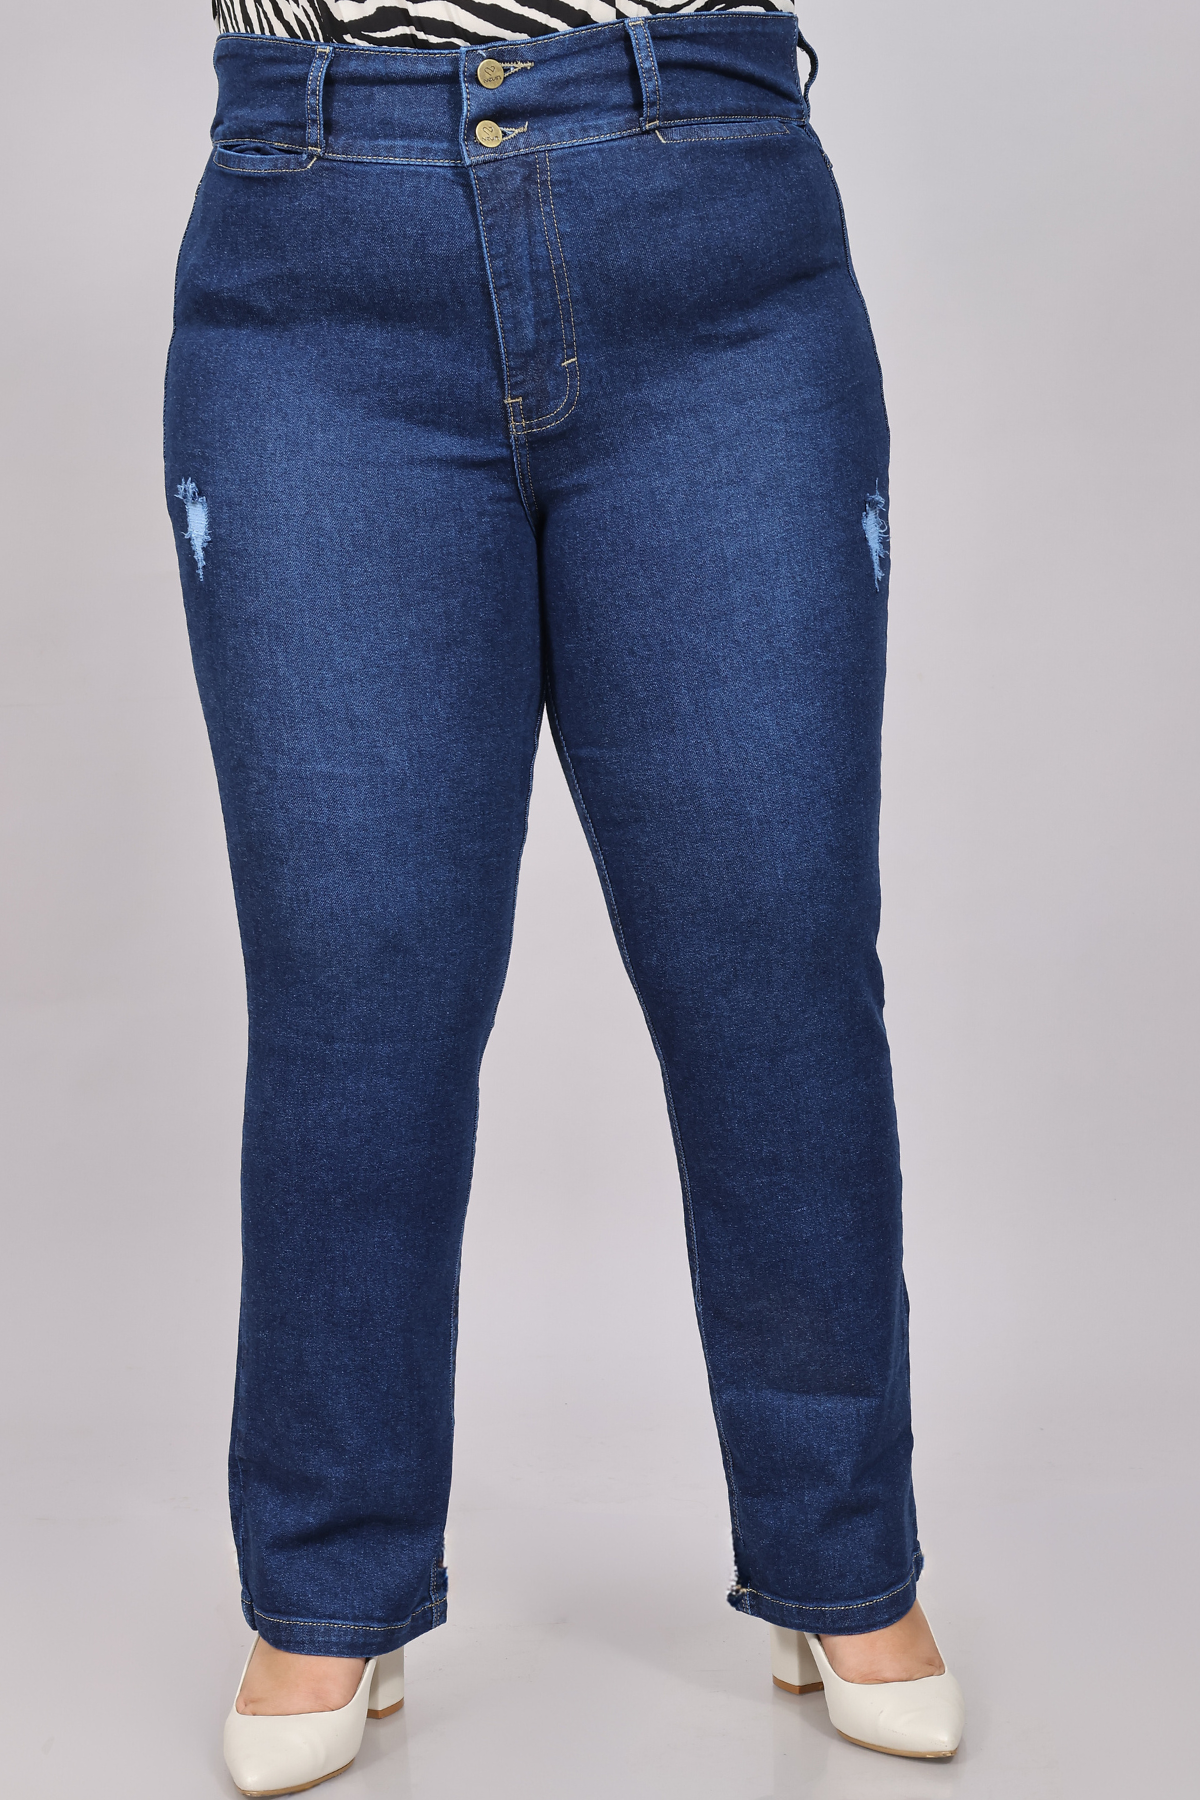 Jeans Corte Recto Damaris Azul